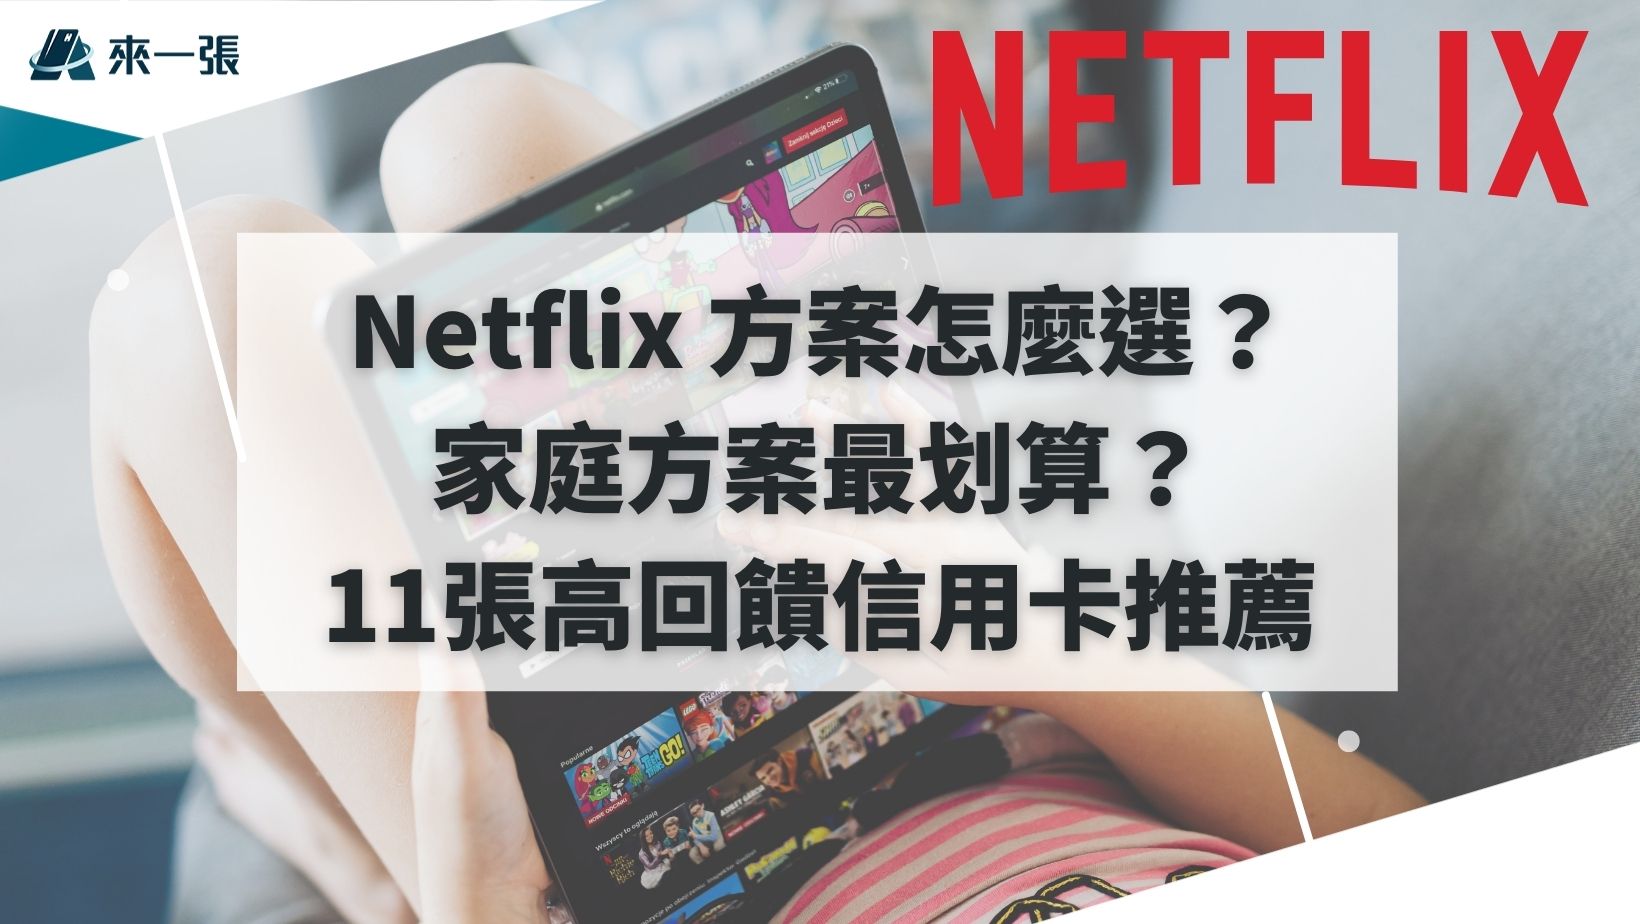 Netflix 方案怎麼選？ 家庭方案最划算？ 11張高回饋信用卡推薦